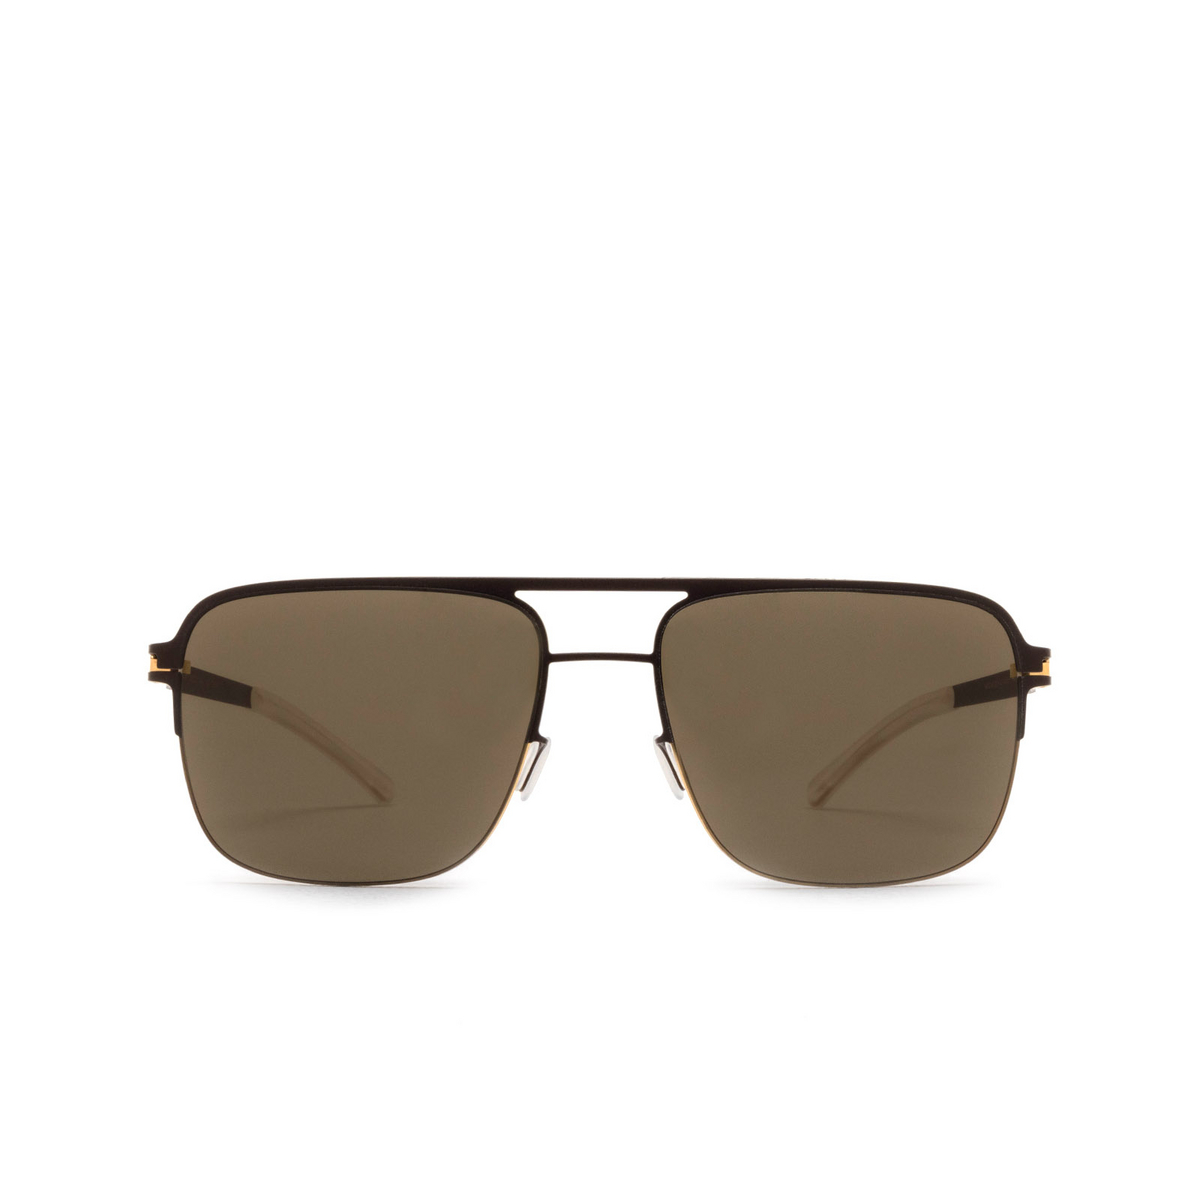 Mykita COLBY Sunglasses 122 Gold/Dark Brown - front view